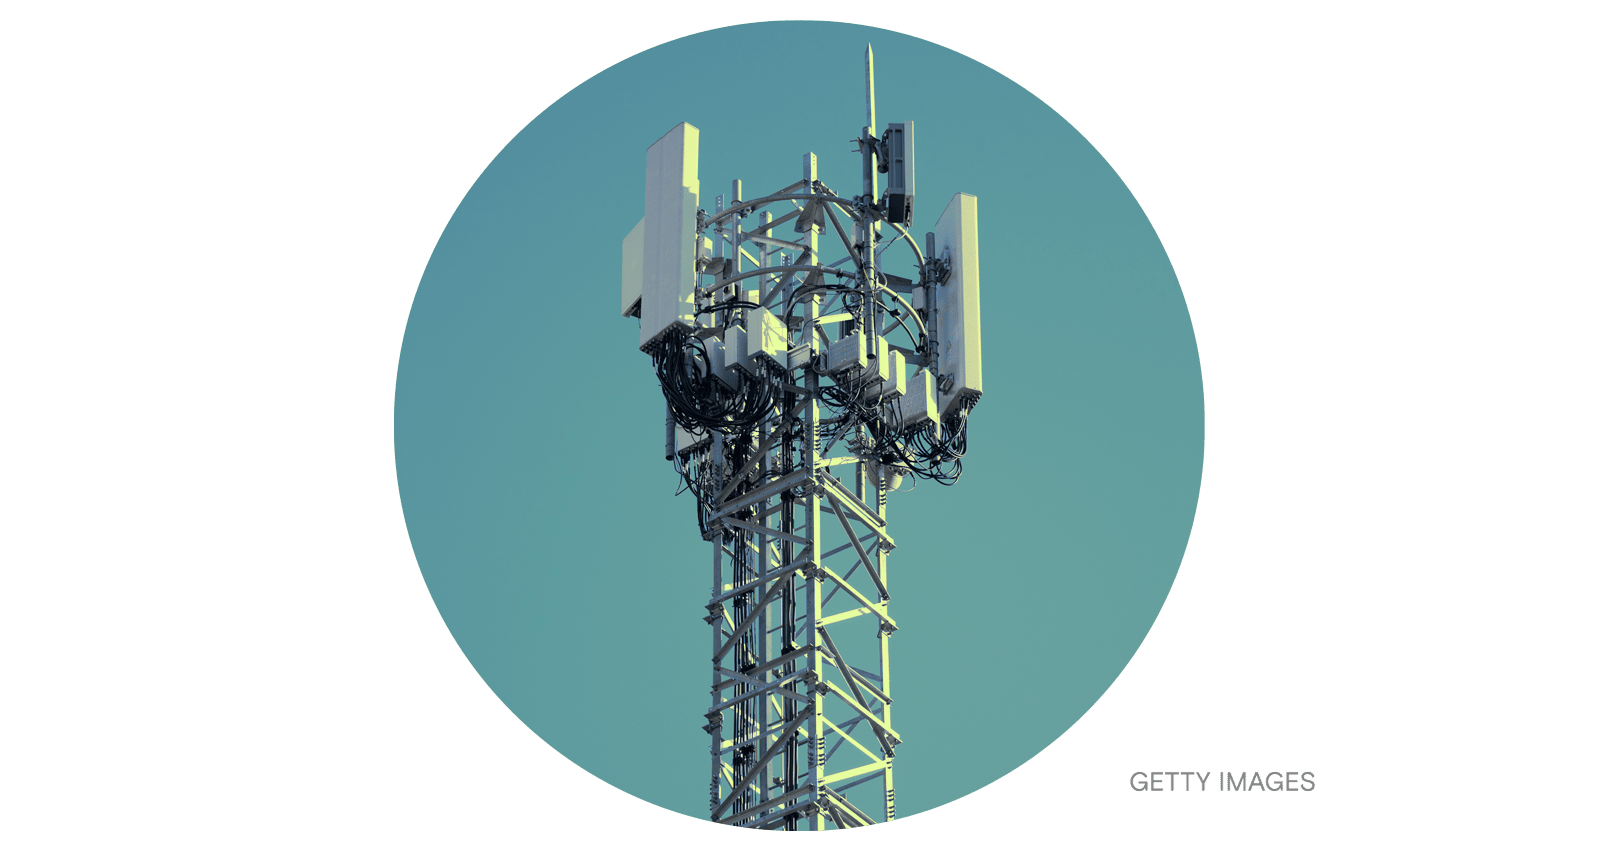 A 5G mobile phone mast in Cardiff, United Kingdom